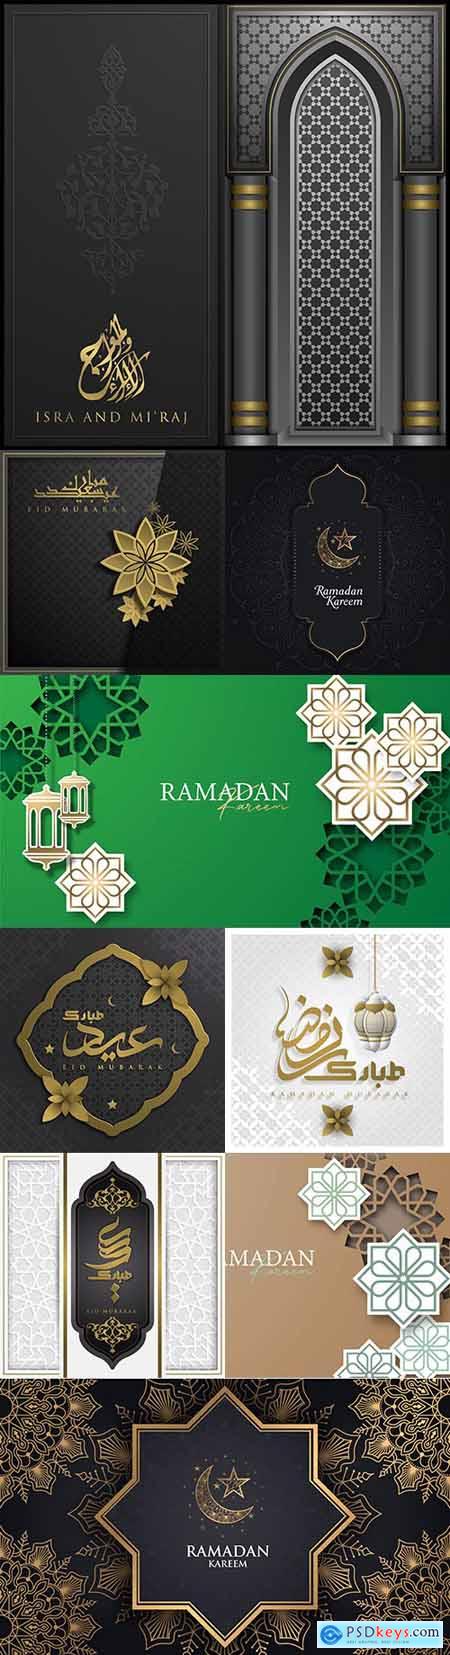 Eid Mubarak and Ramadan Kareem gold design with calligraphy